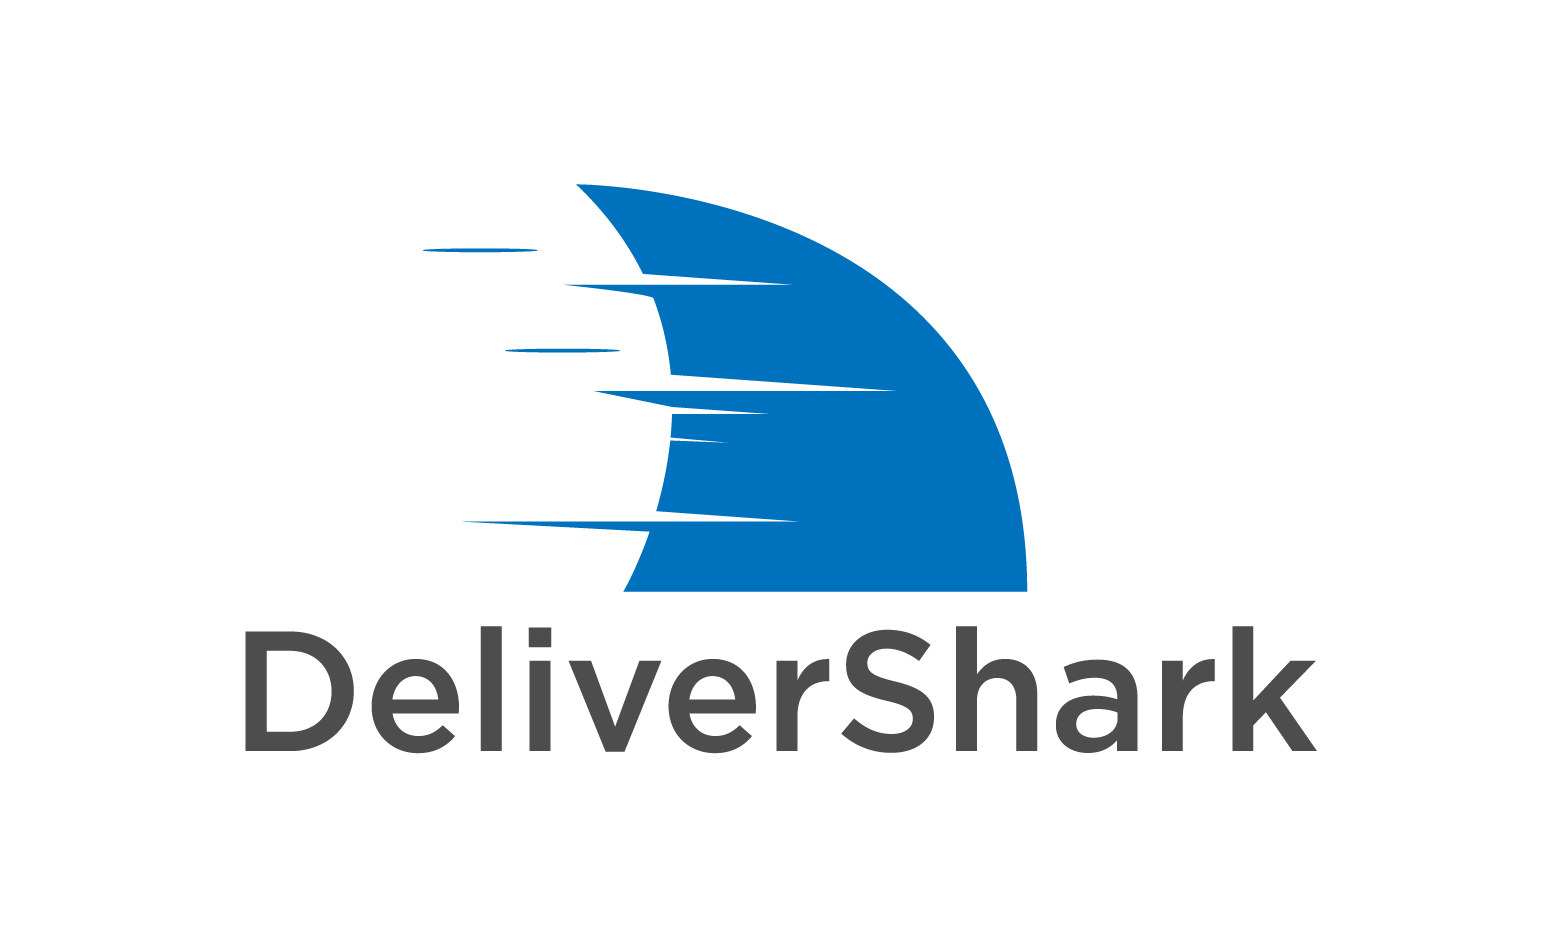 DeliverShark.com - Creative brandable domain for sale